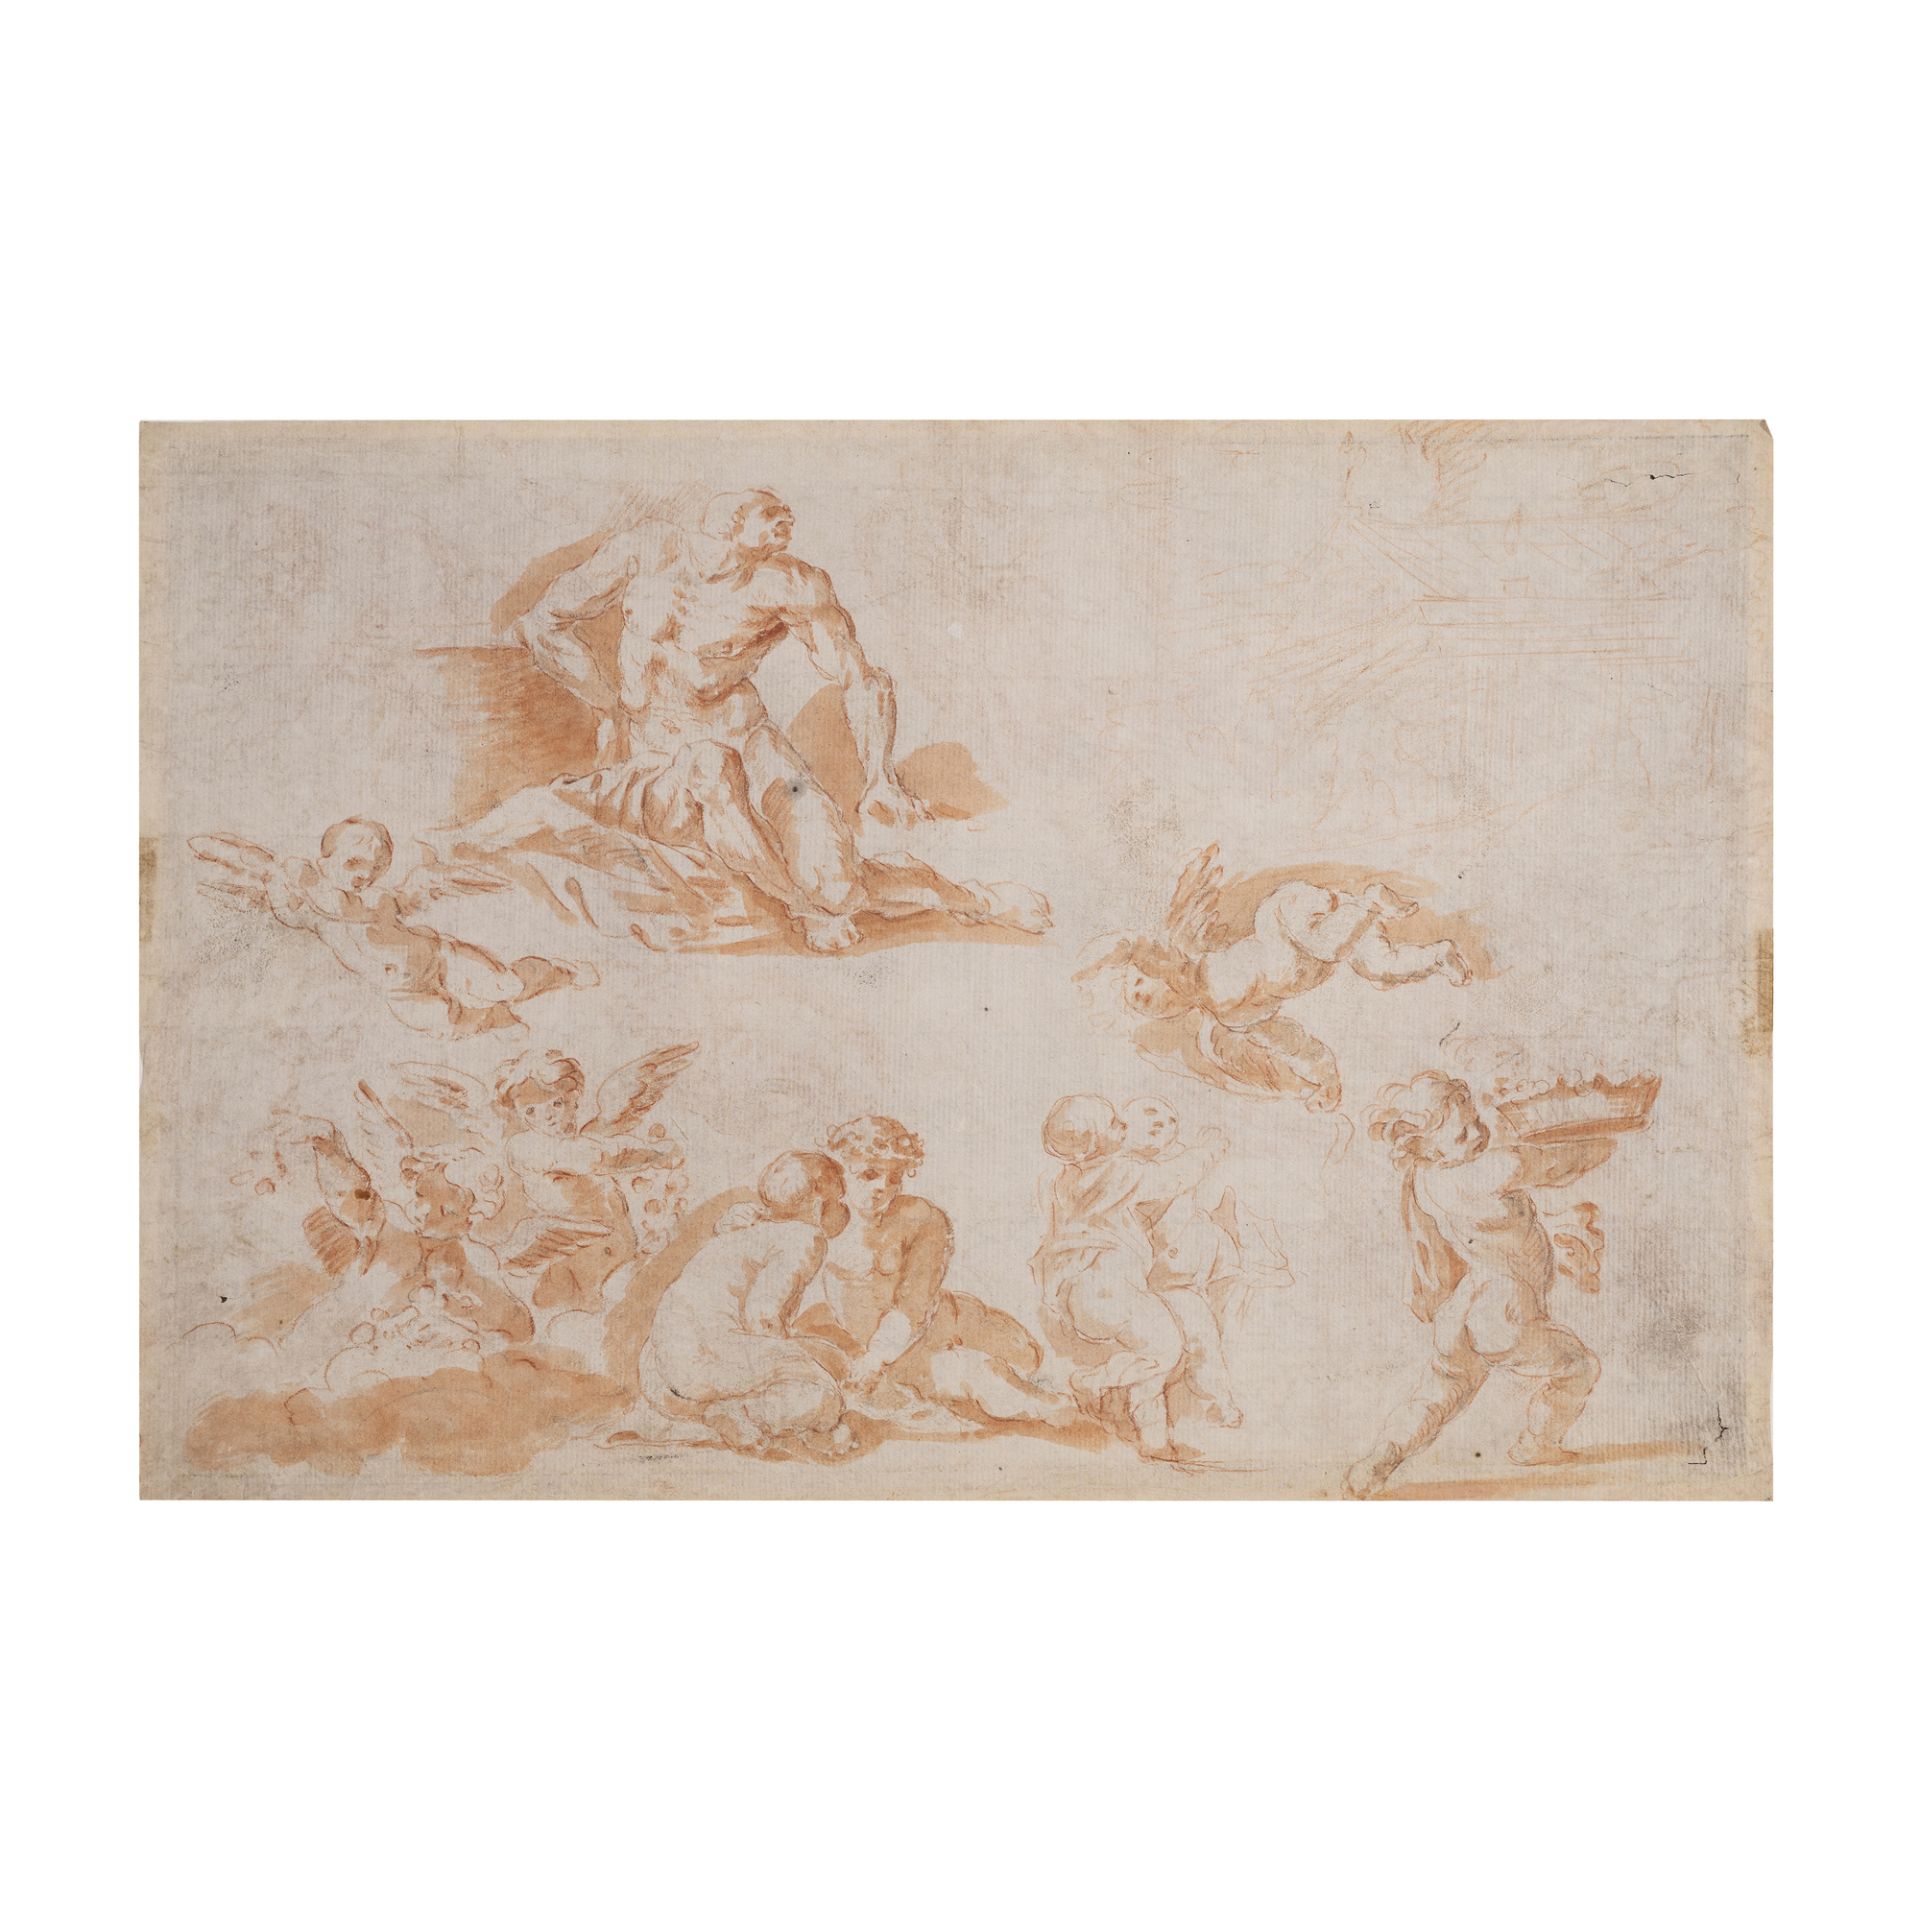 Luca Giordano (Napoli 1634 - 1705) cerchia di - Image 2 of 2